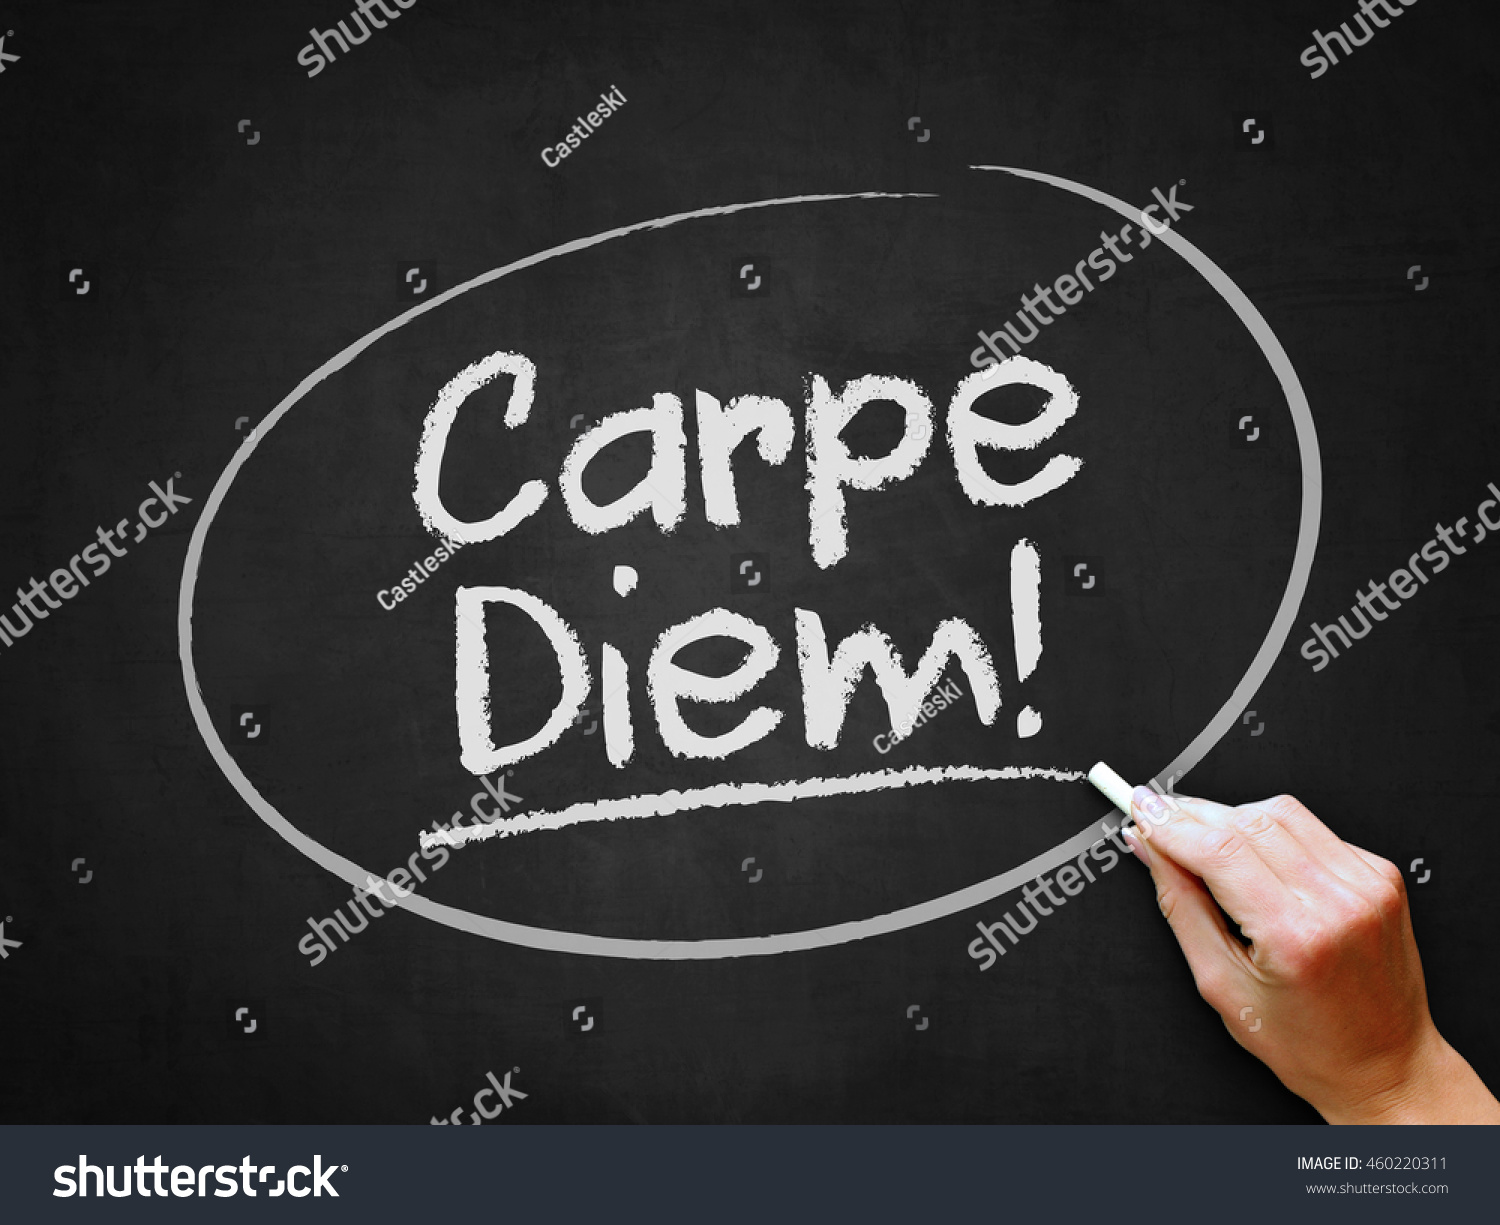 A Hand Writing 'Carpe Diem!' On Chalkboard. Stock Photo ...